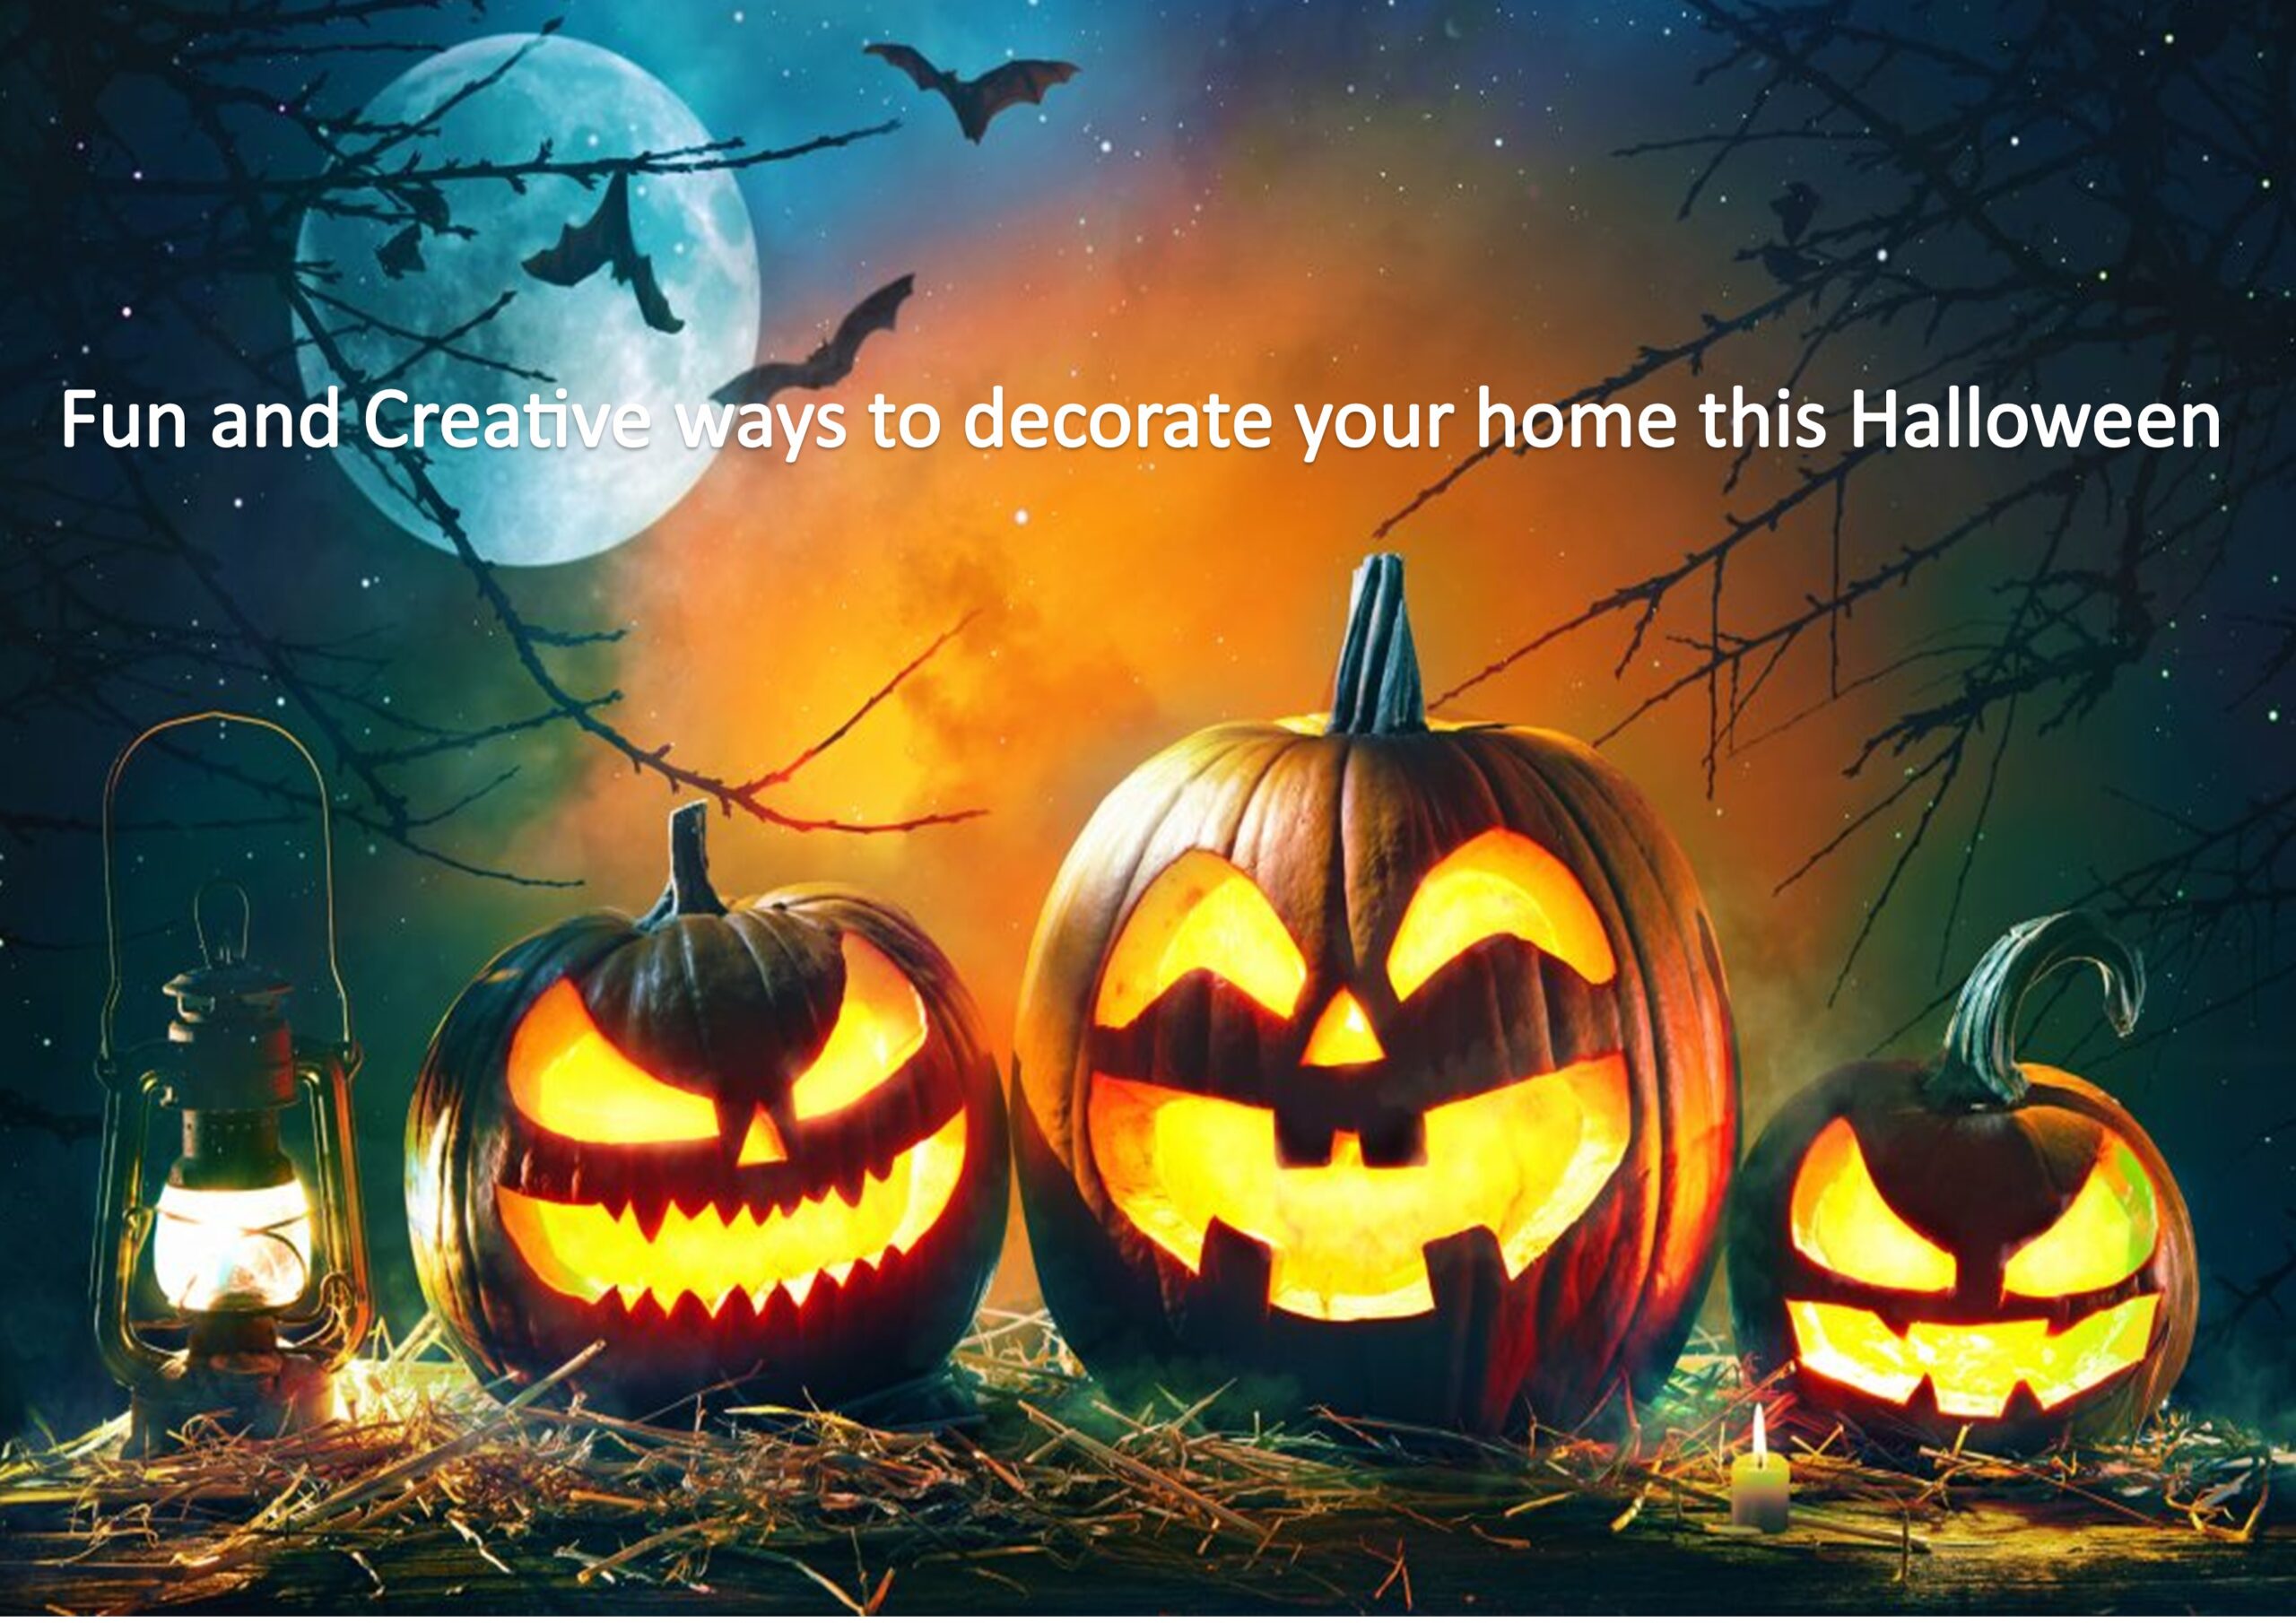 Halloween decorating ideas